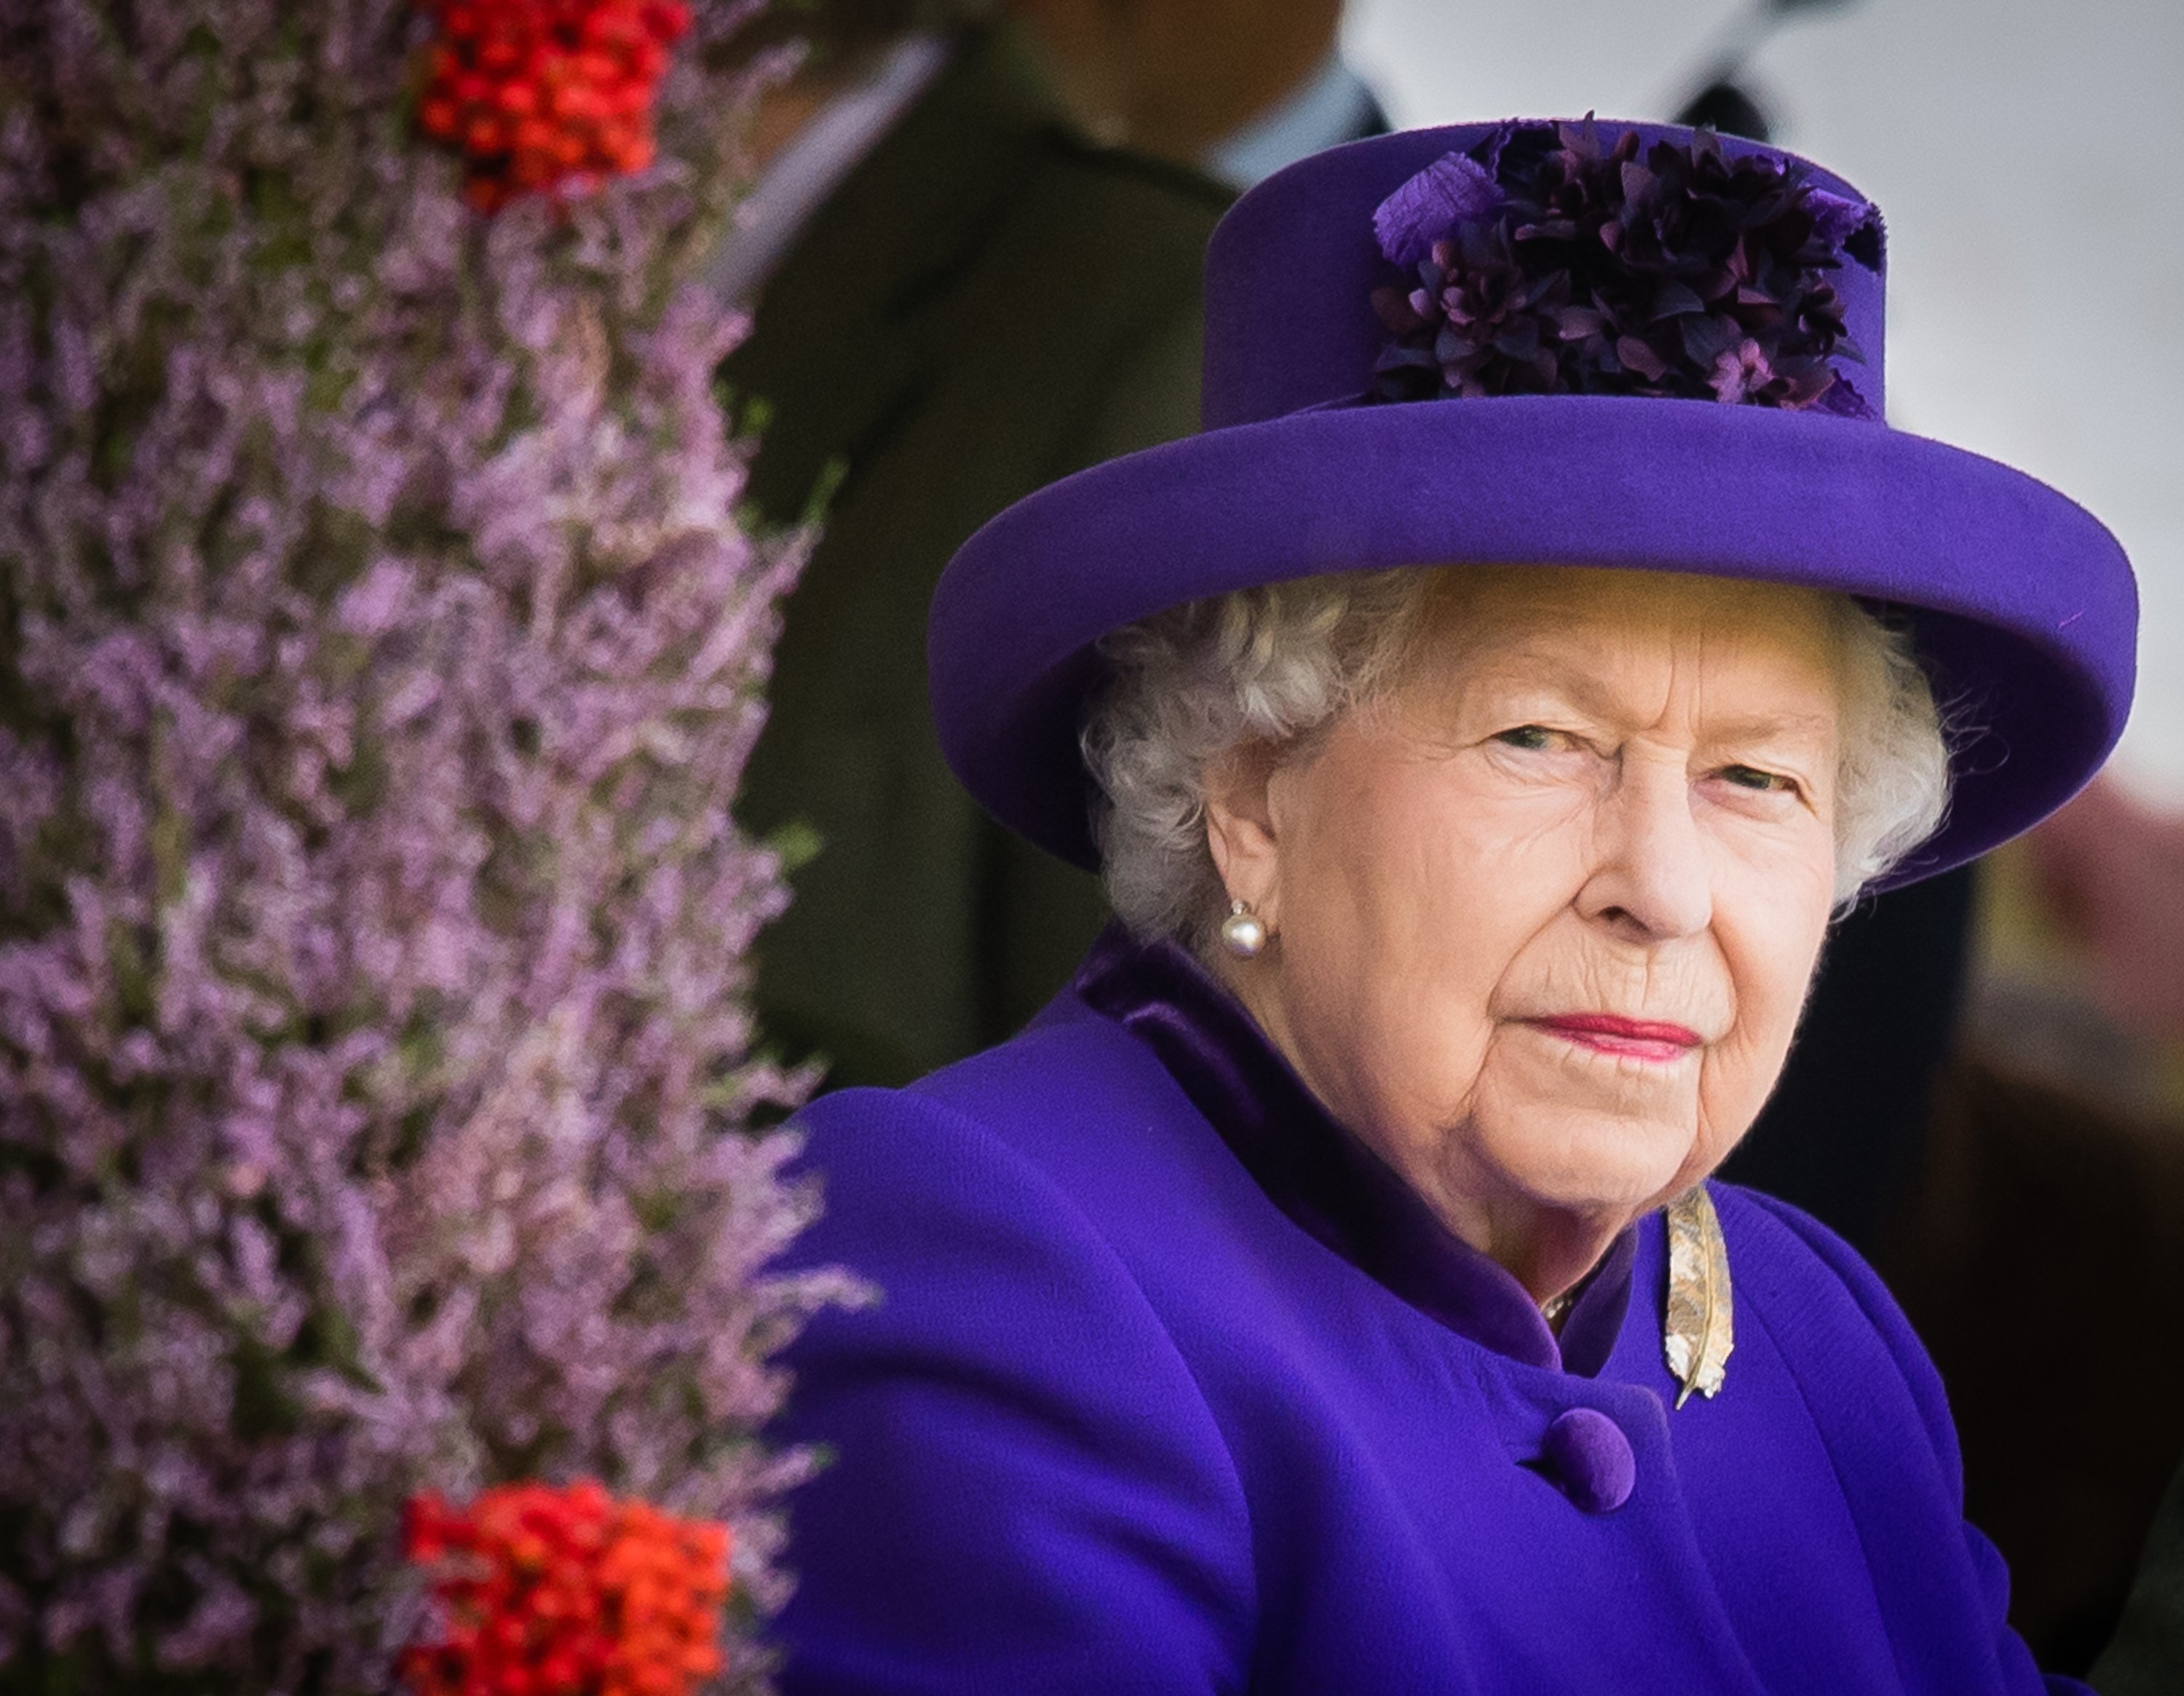 Queen Elizabeth II attends the 2019 Braemar Highland Games on September 07, 2019 in Braemar, Scotland. | Source: Getty Images